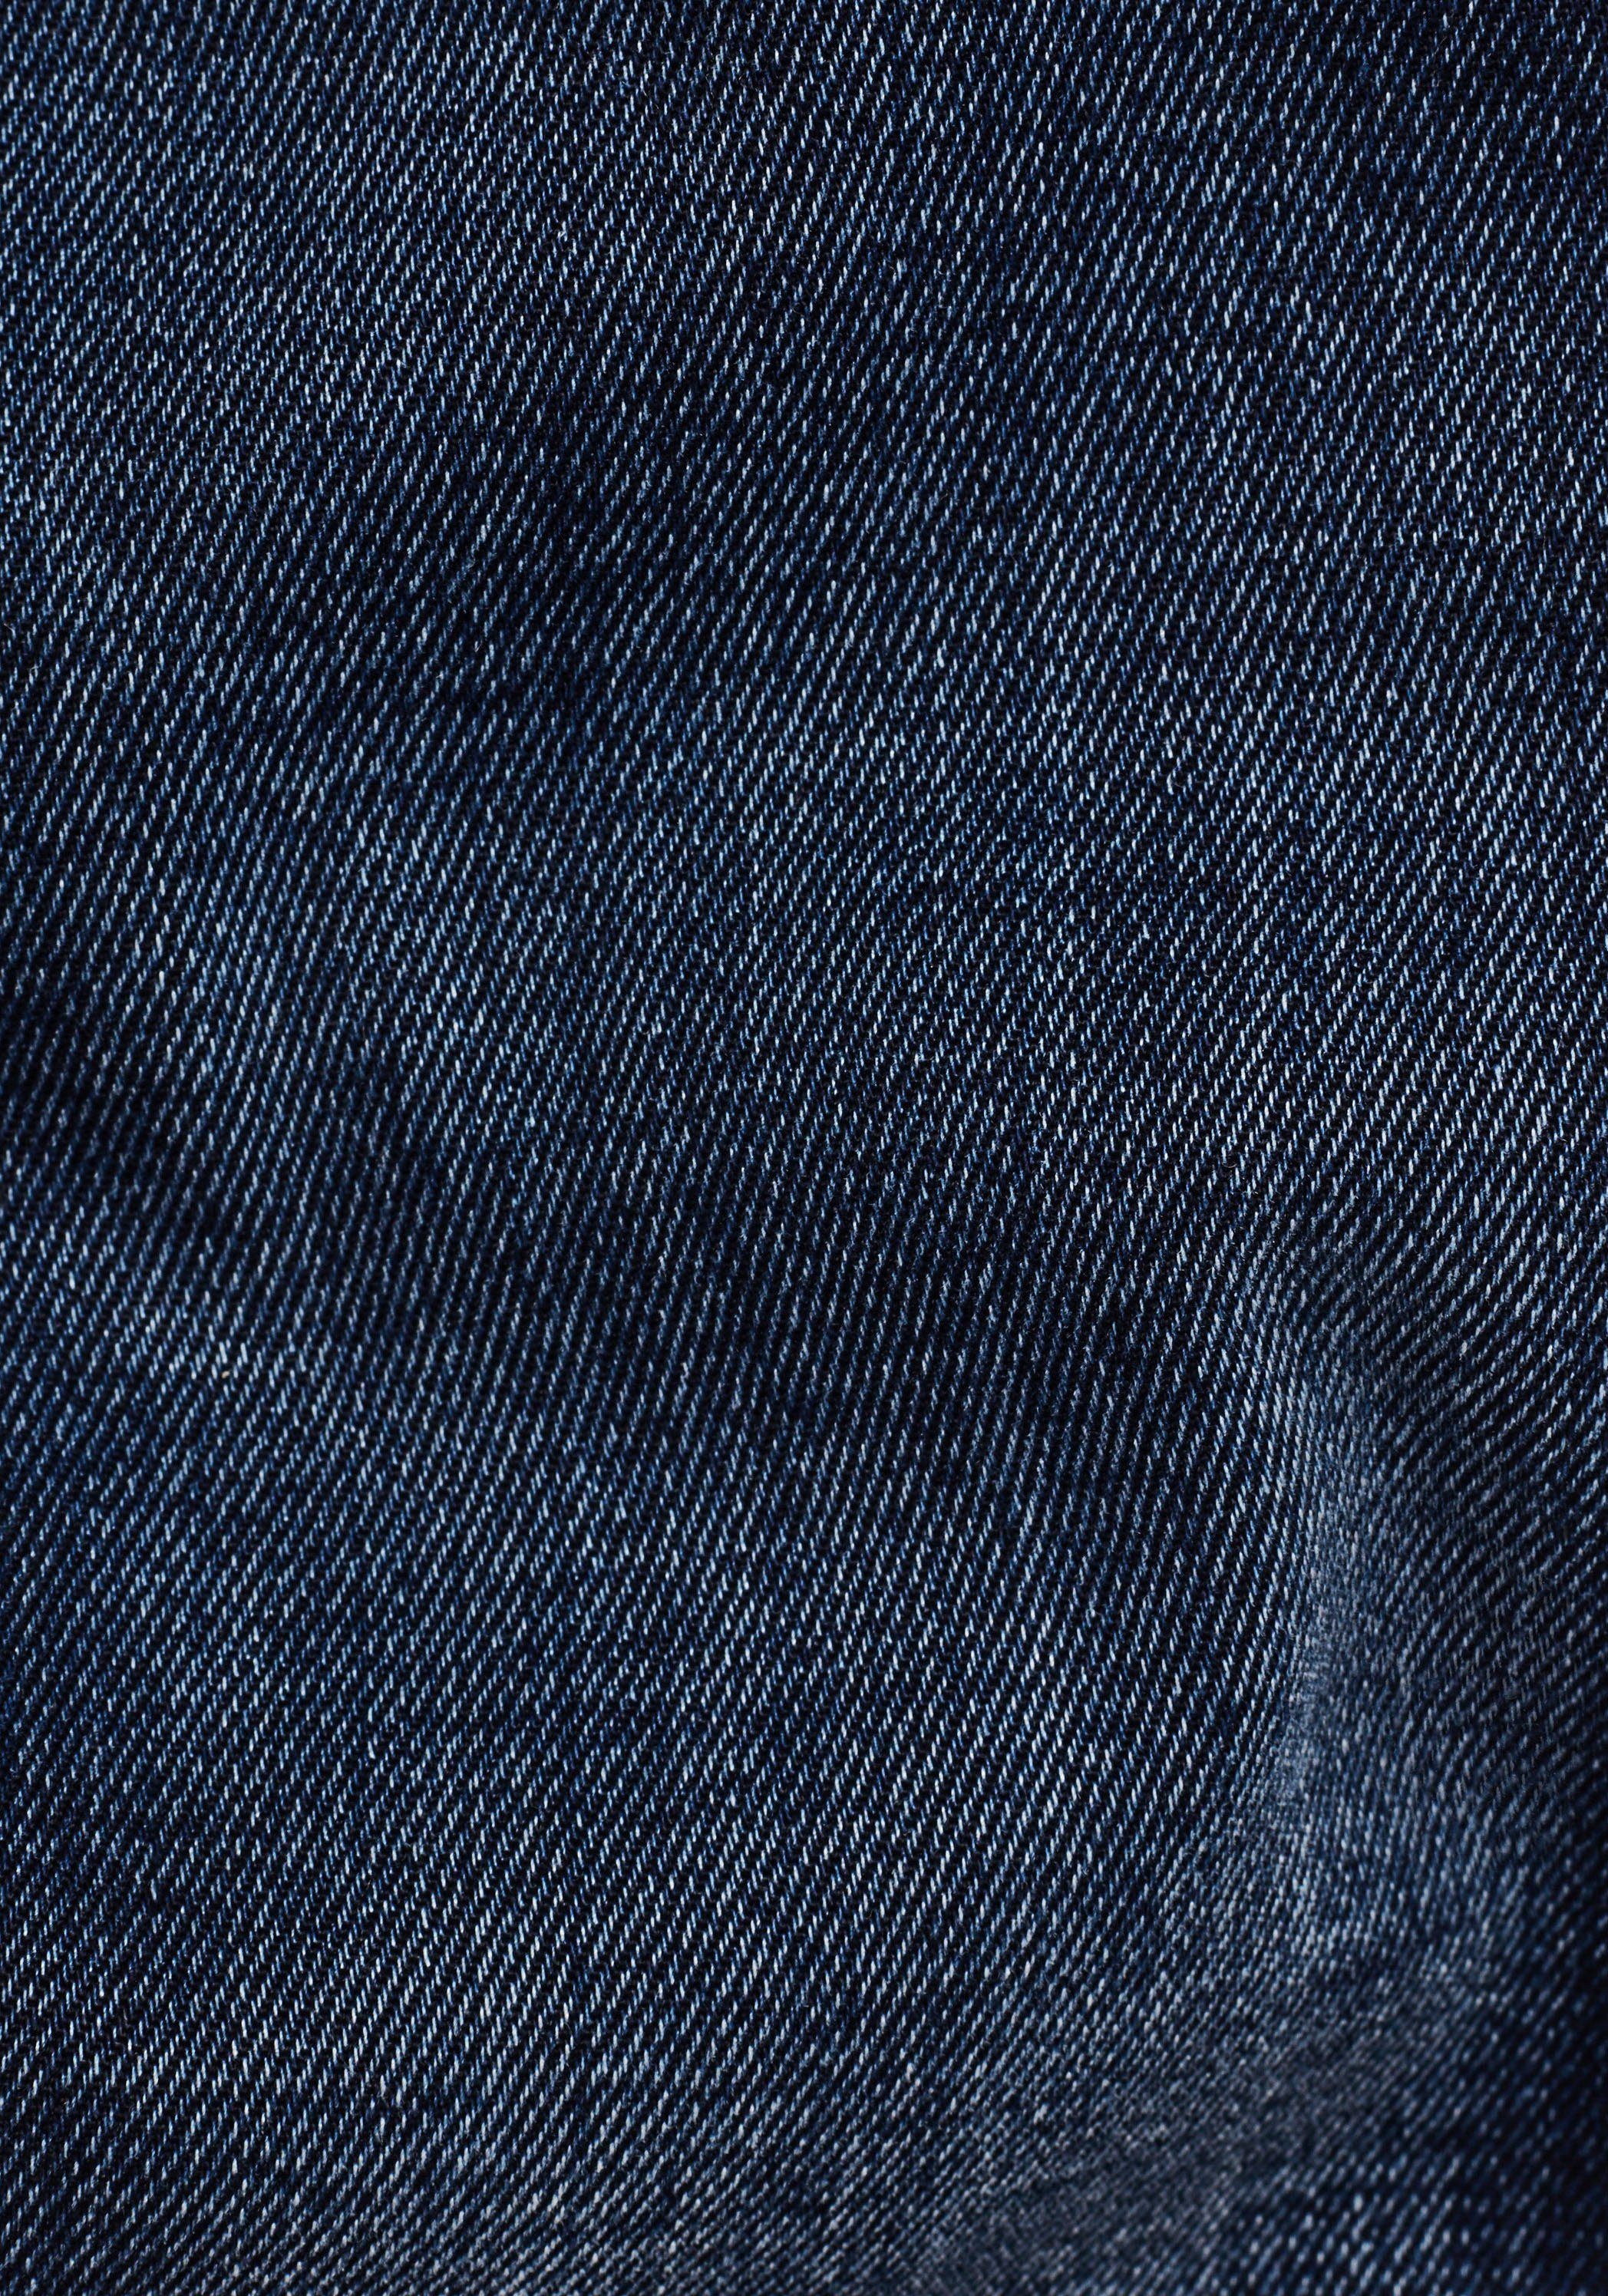 des Skinny-fit-Jeans aged moderne Mid klassischen 5-Pocket-Designs Skinny RAW medium Waist Version G-Star